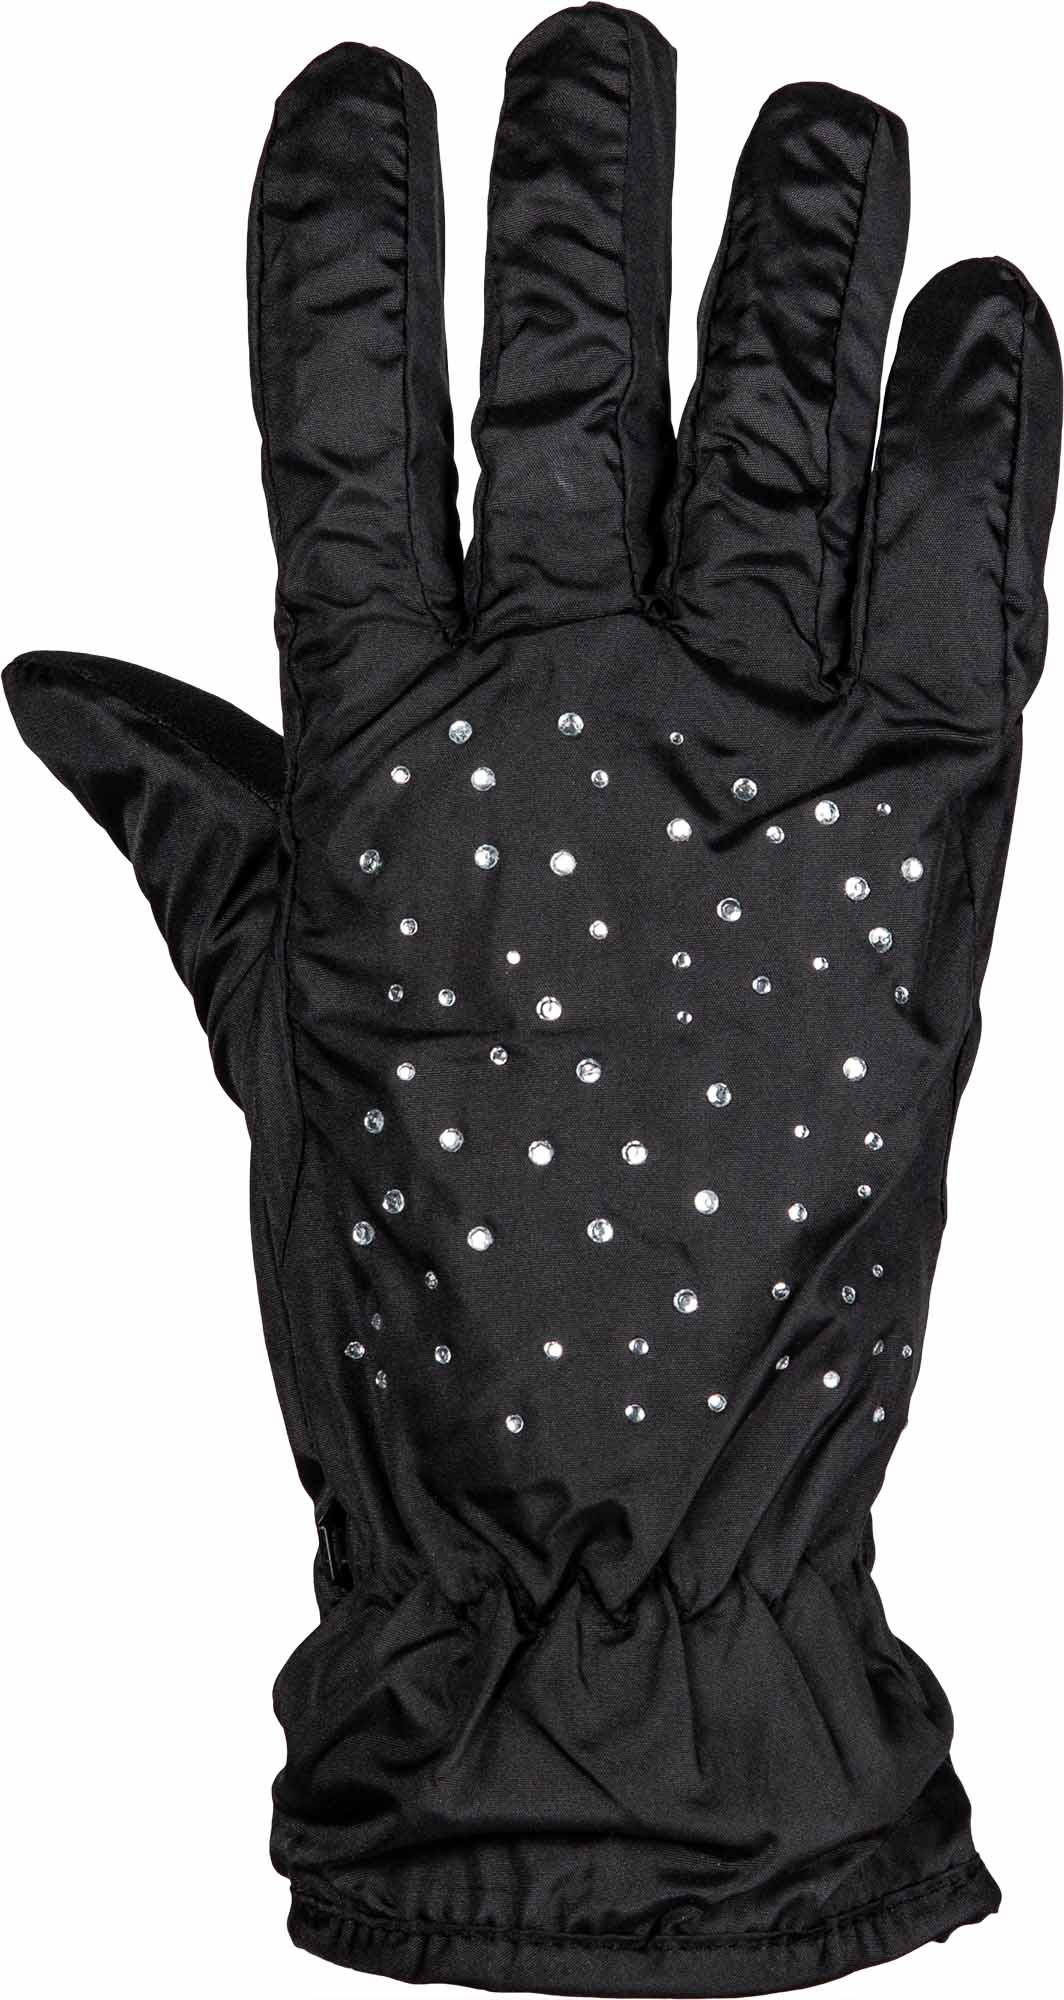 Women’s gloves